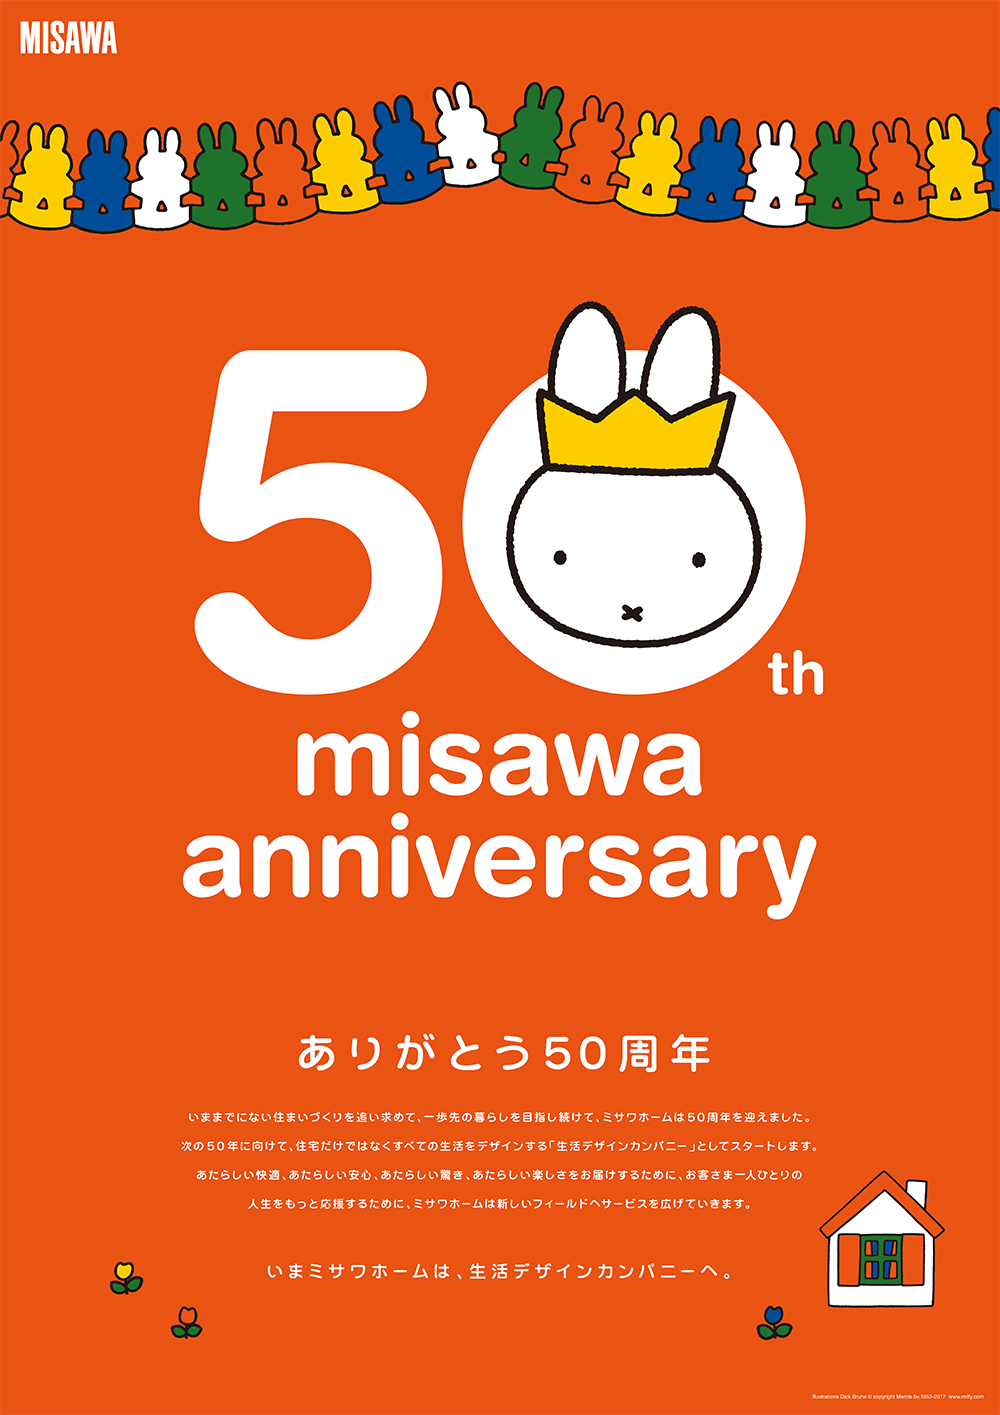 misawa 50th